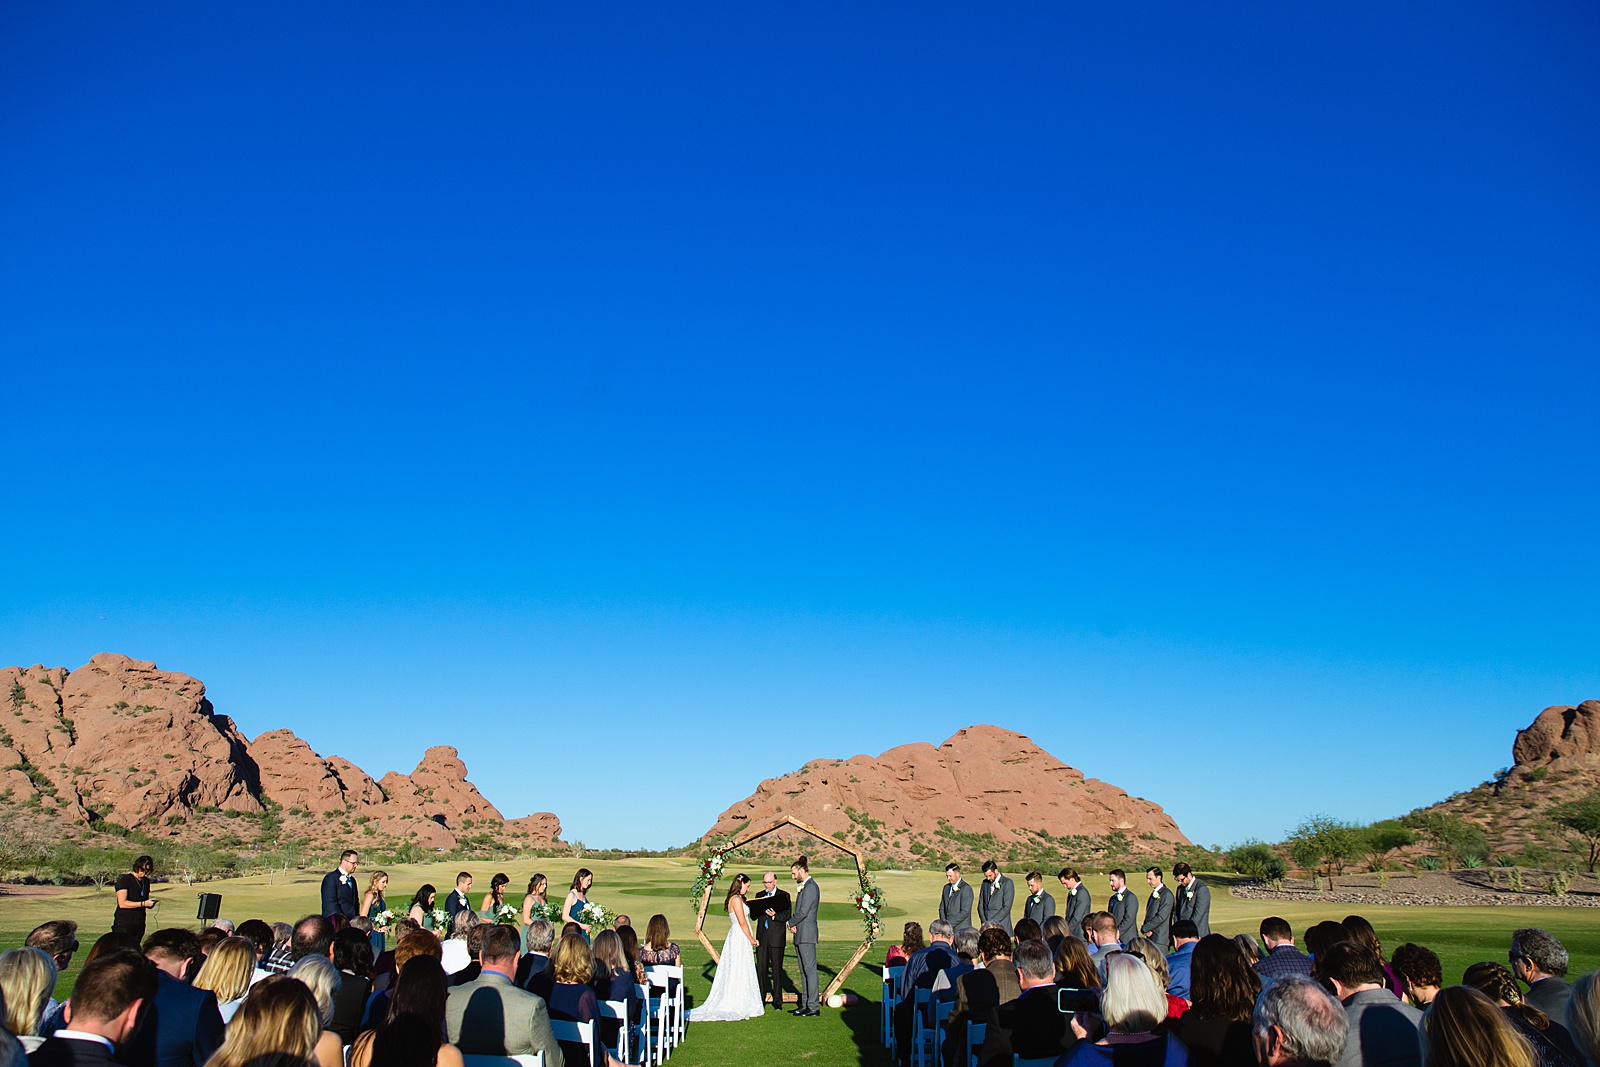 Wedding ceremony at Papago Events by Phoenix wedding photographer PMA Photography.